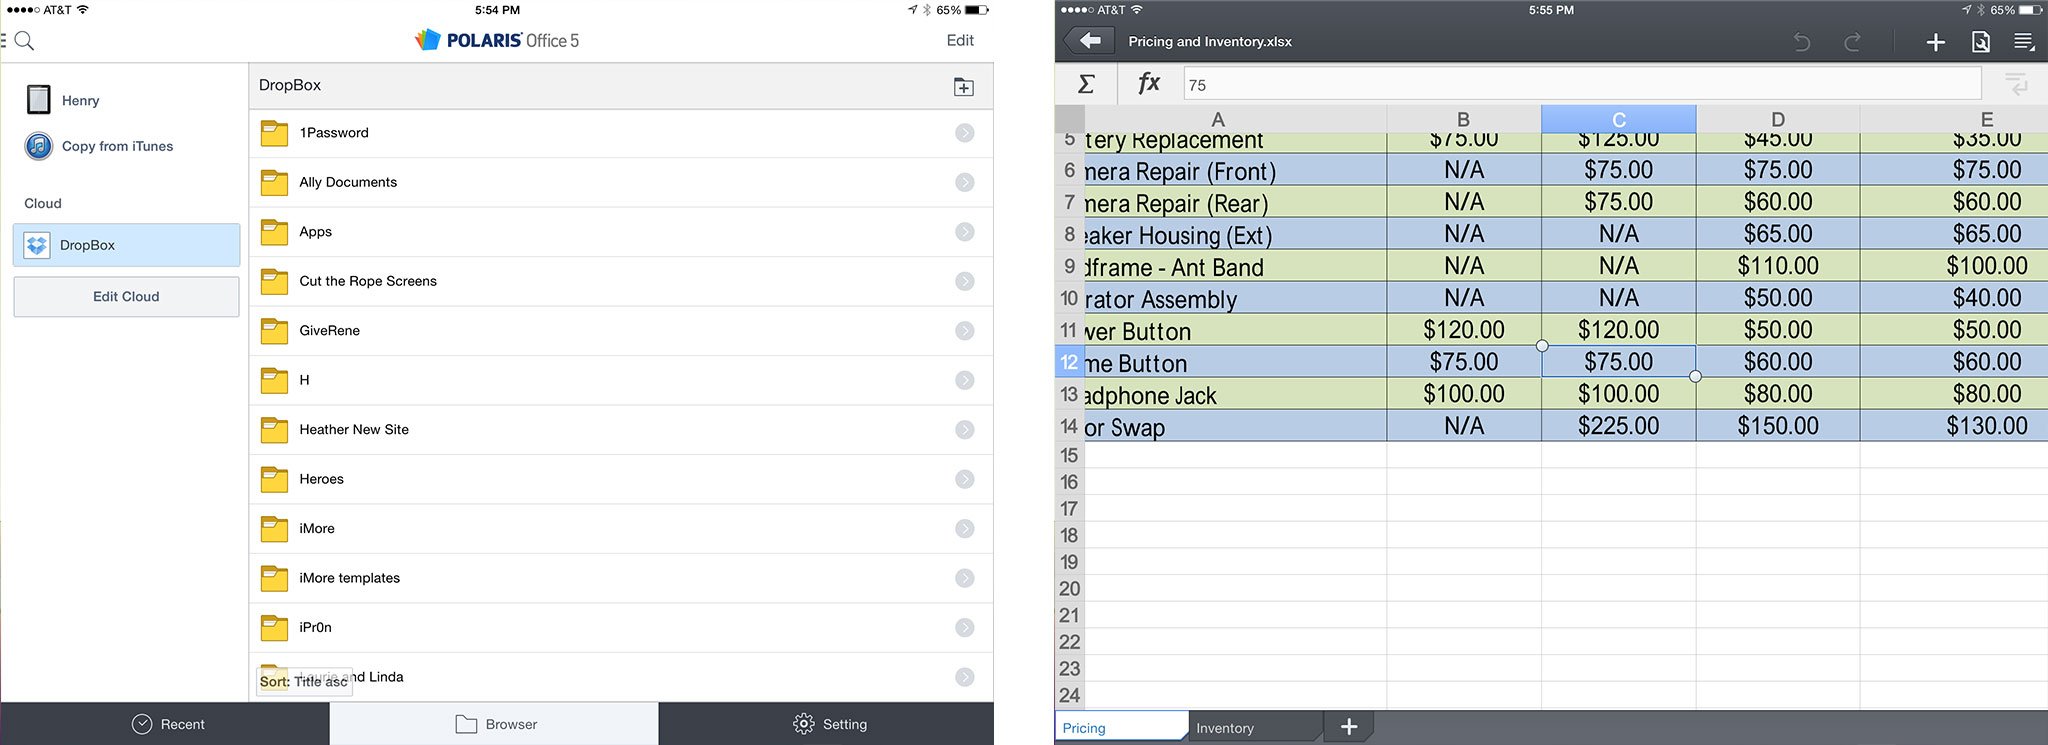 Best spreadsheet apps for iPad: POLARIS Office